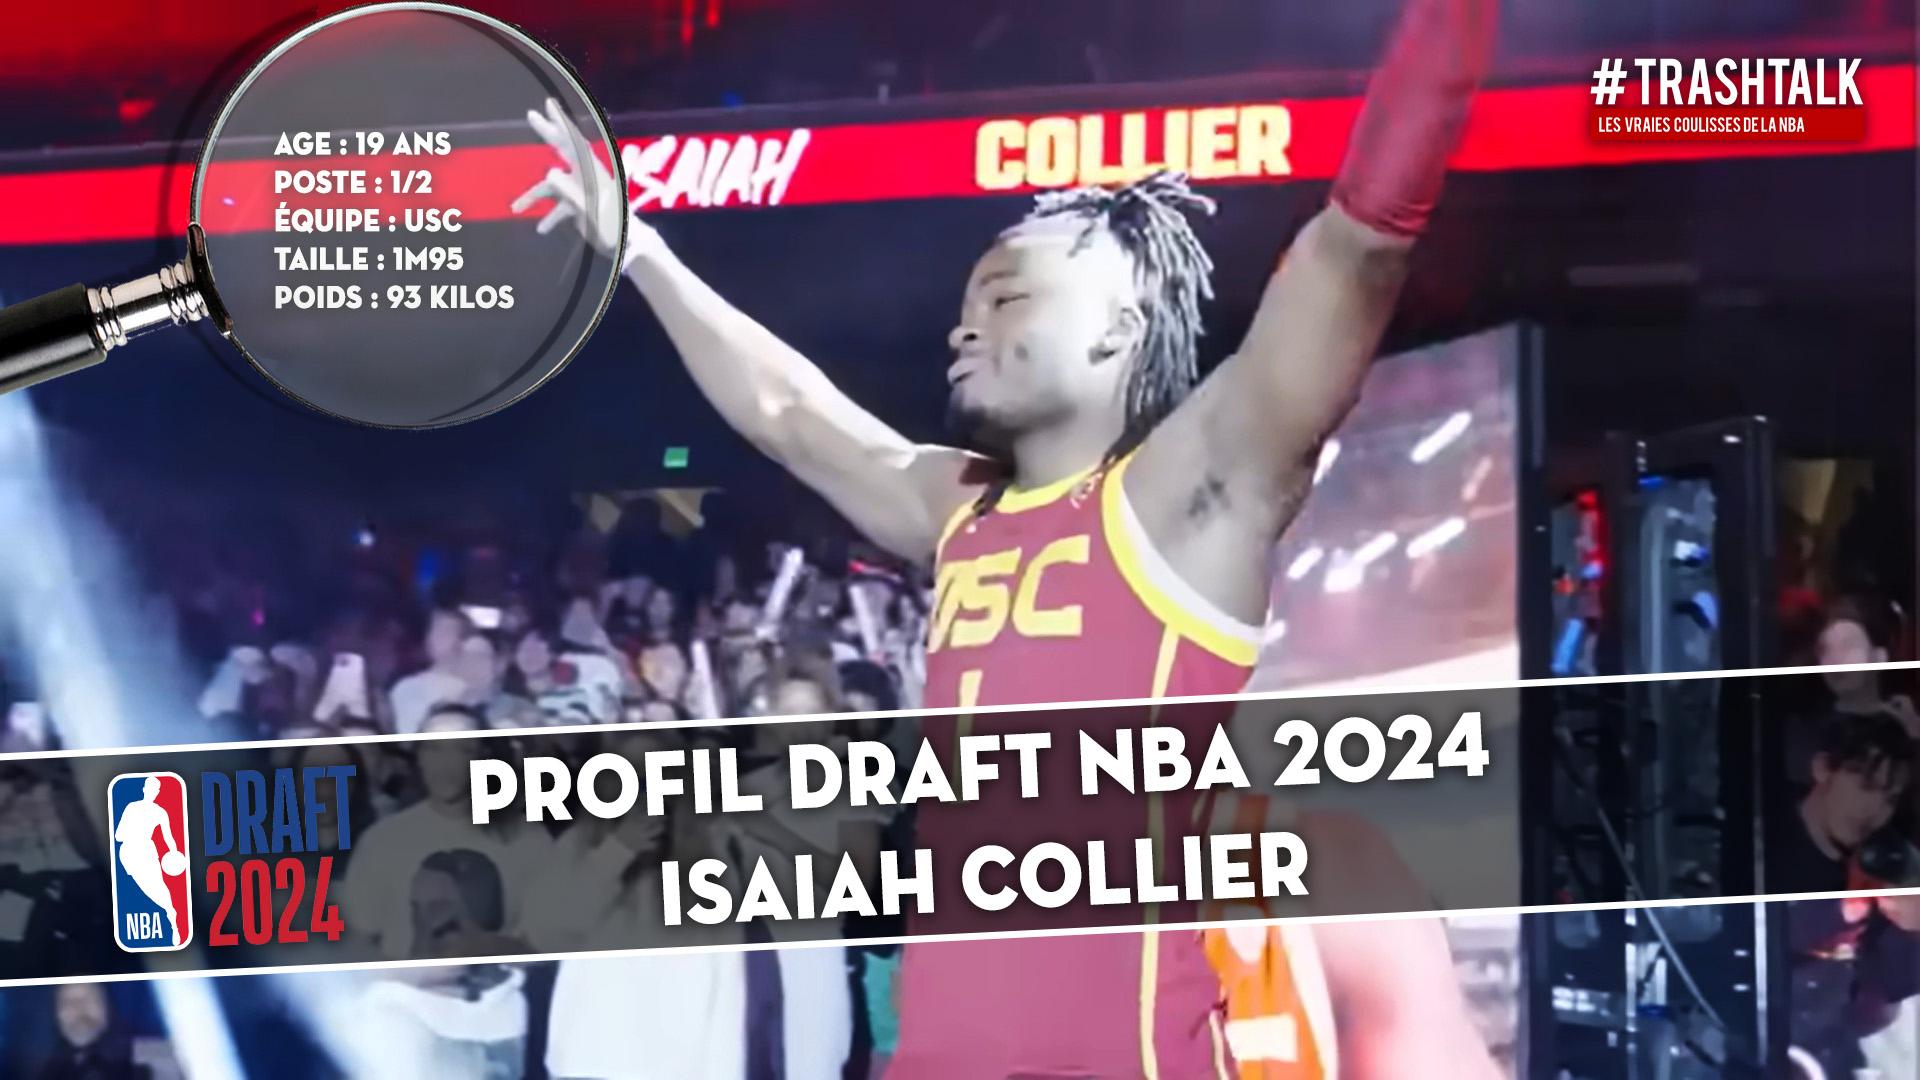 Profil Draft Isaiah Collier 4 juin 2024